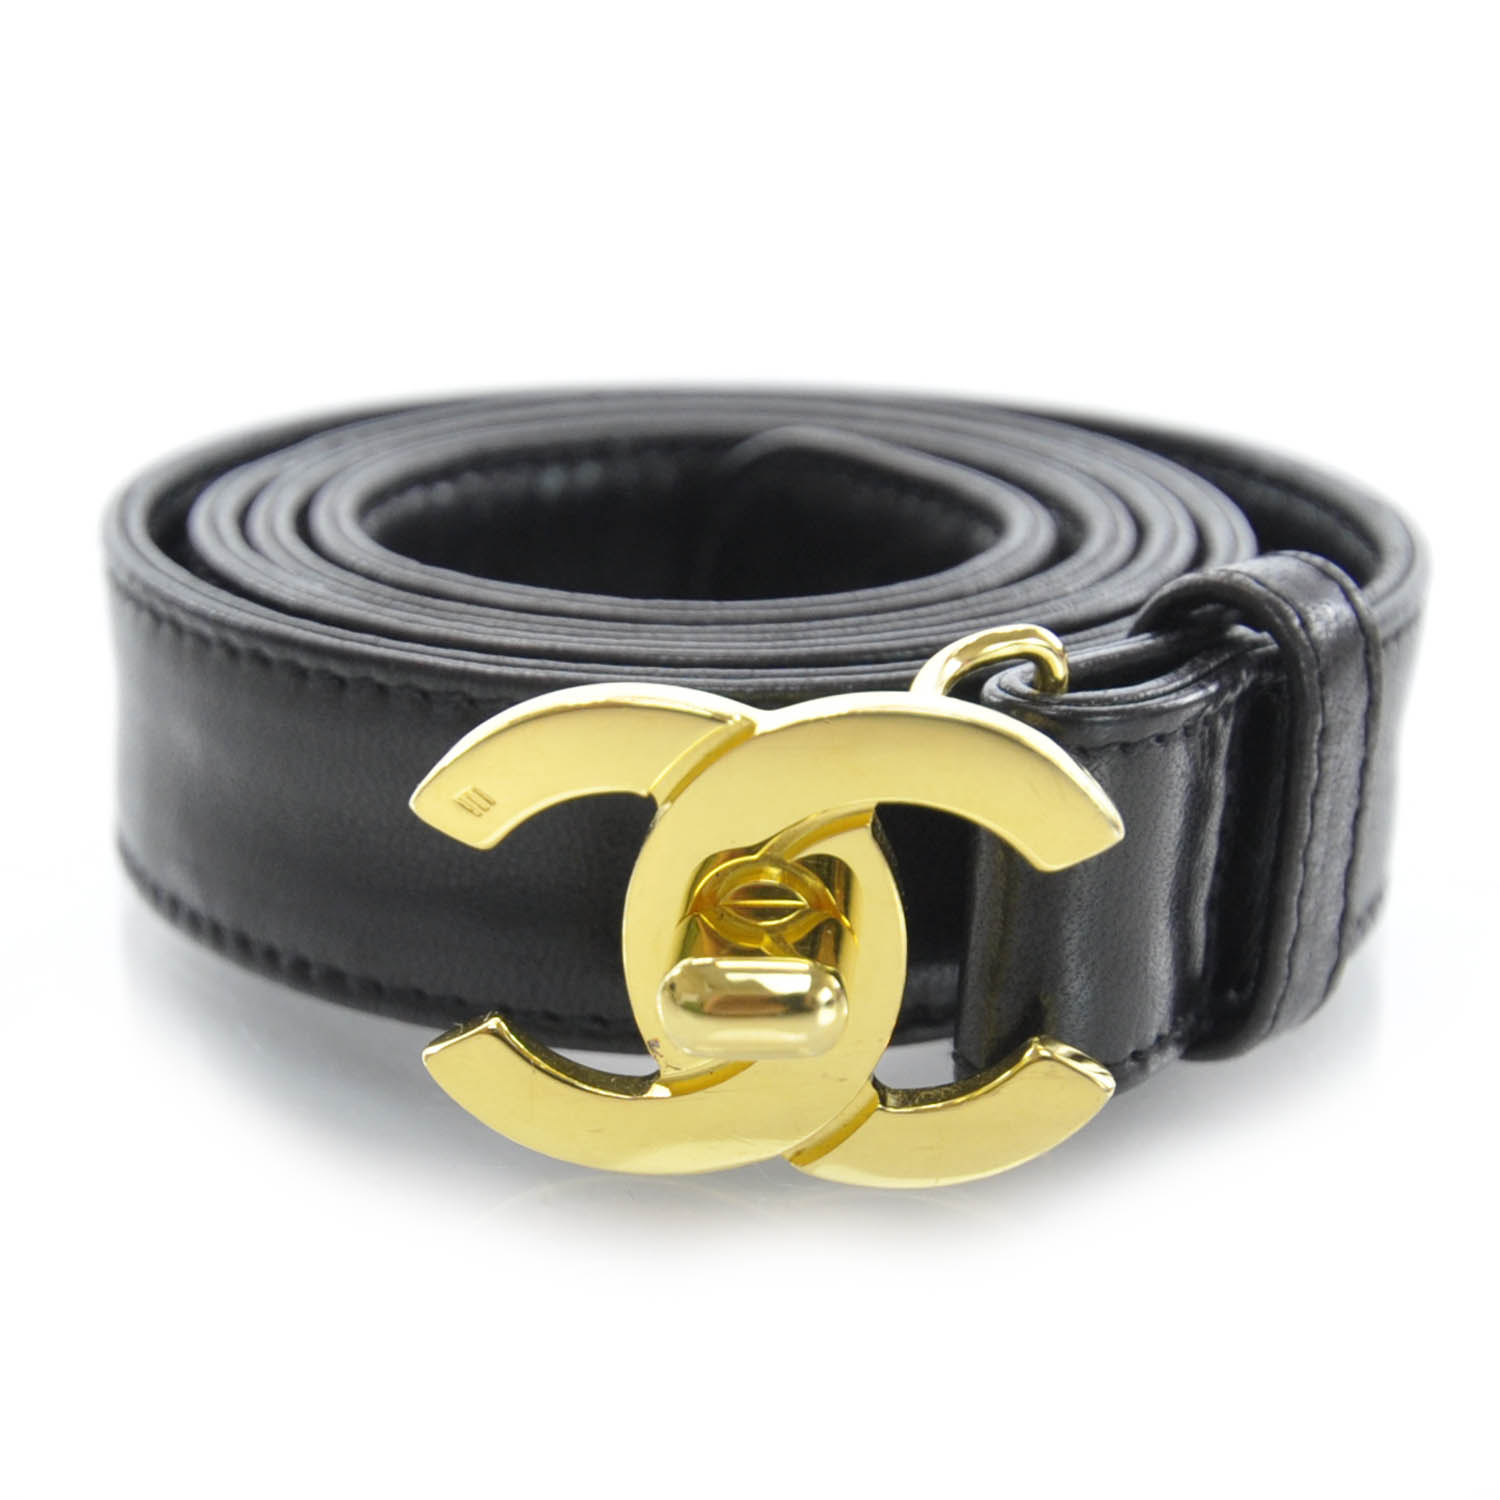 CHANEL Leather CC Turnlock Belt 32 31836